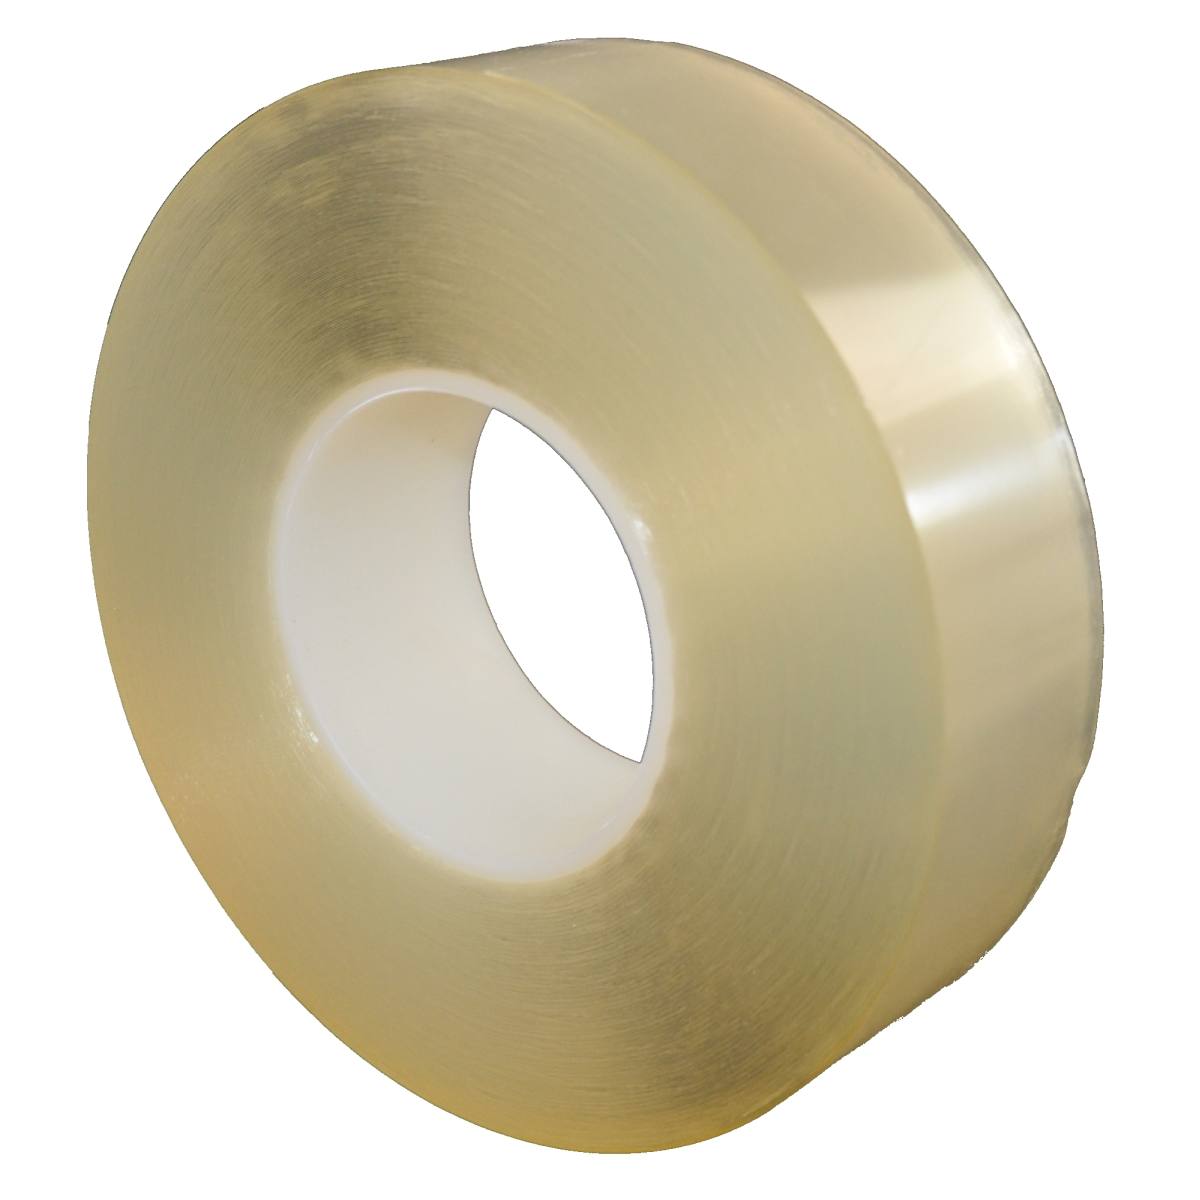 S-K-S transfer adhesive tape 2283 LE20, transparent, 15 mm x 50 m, 0.30 mm